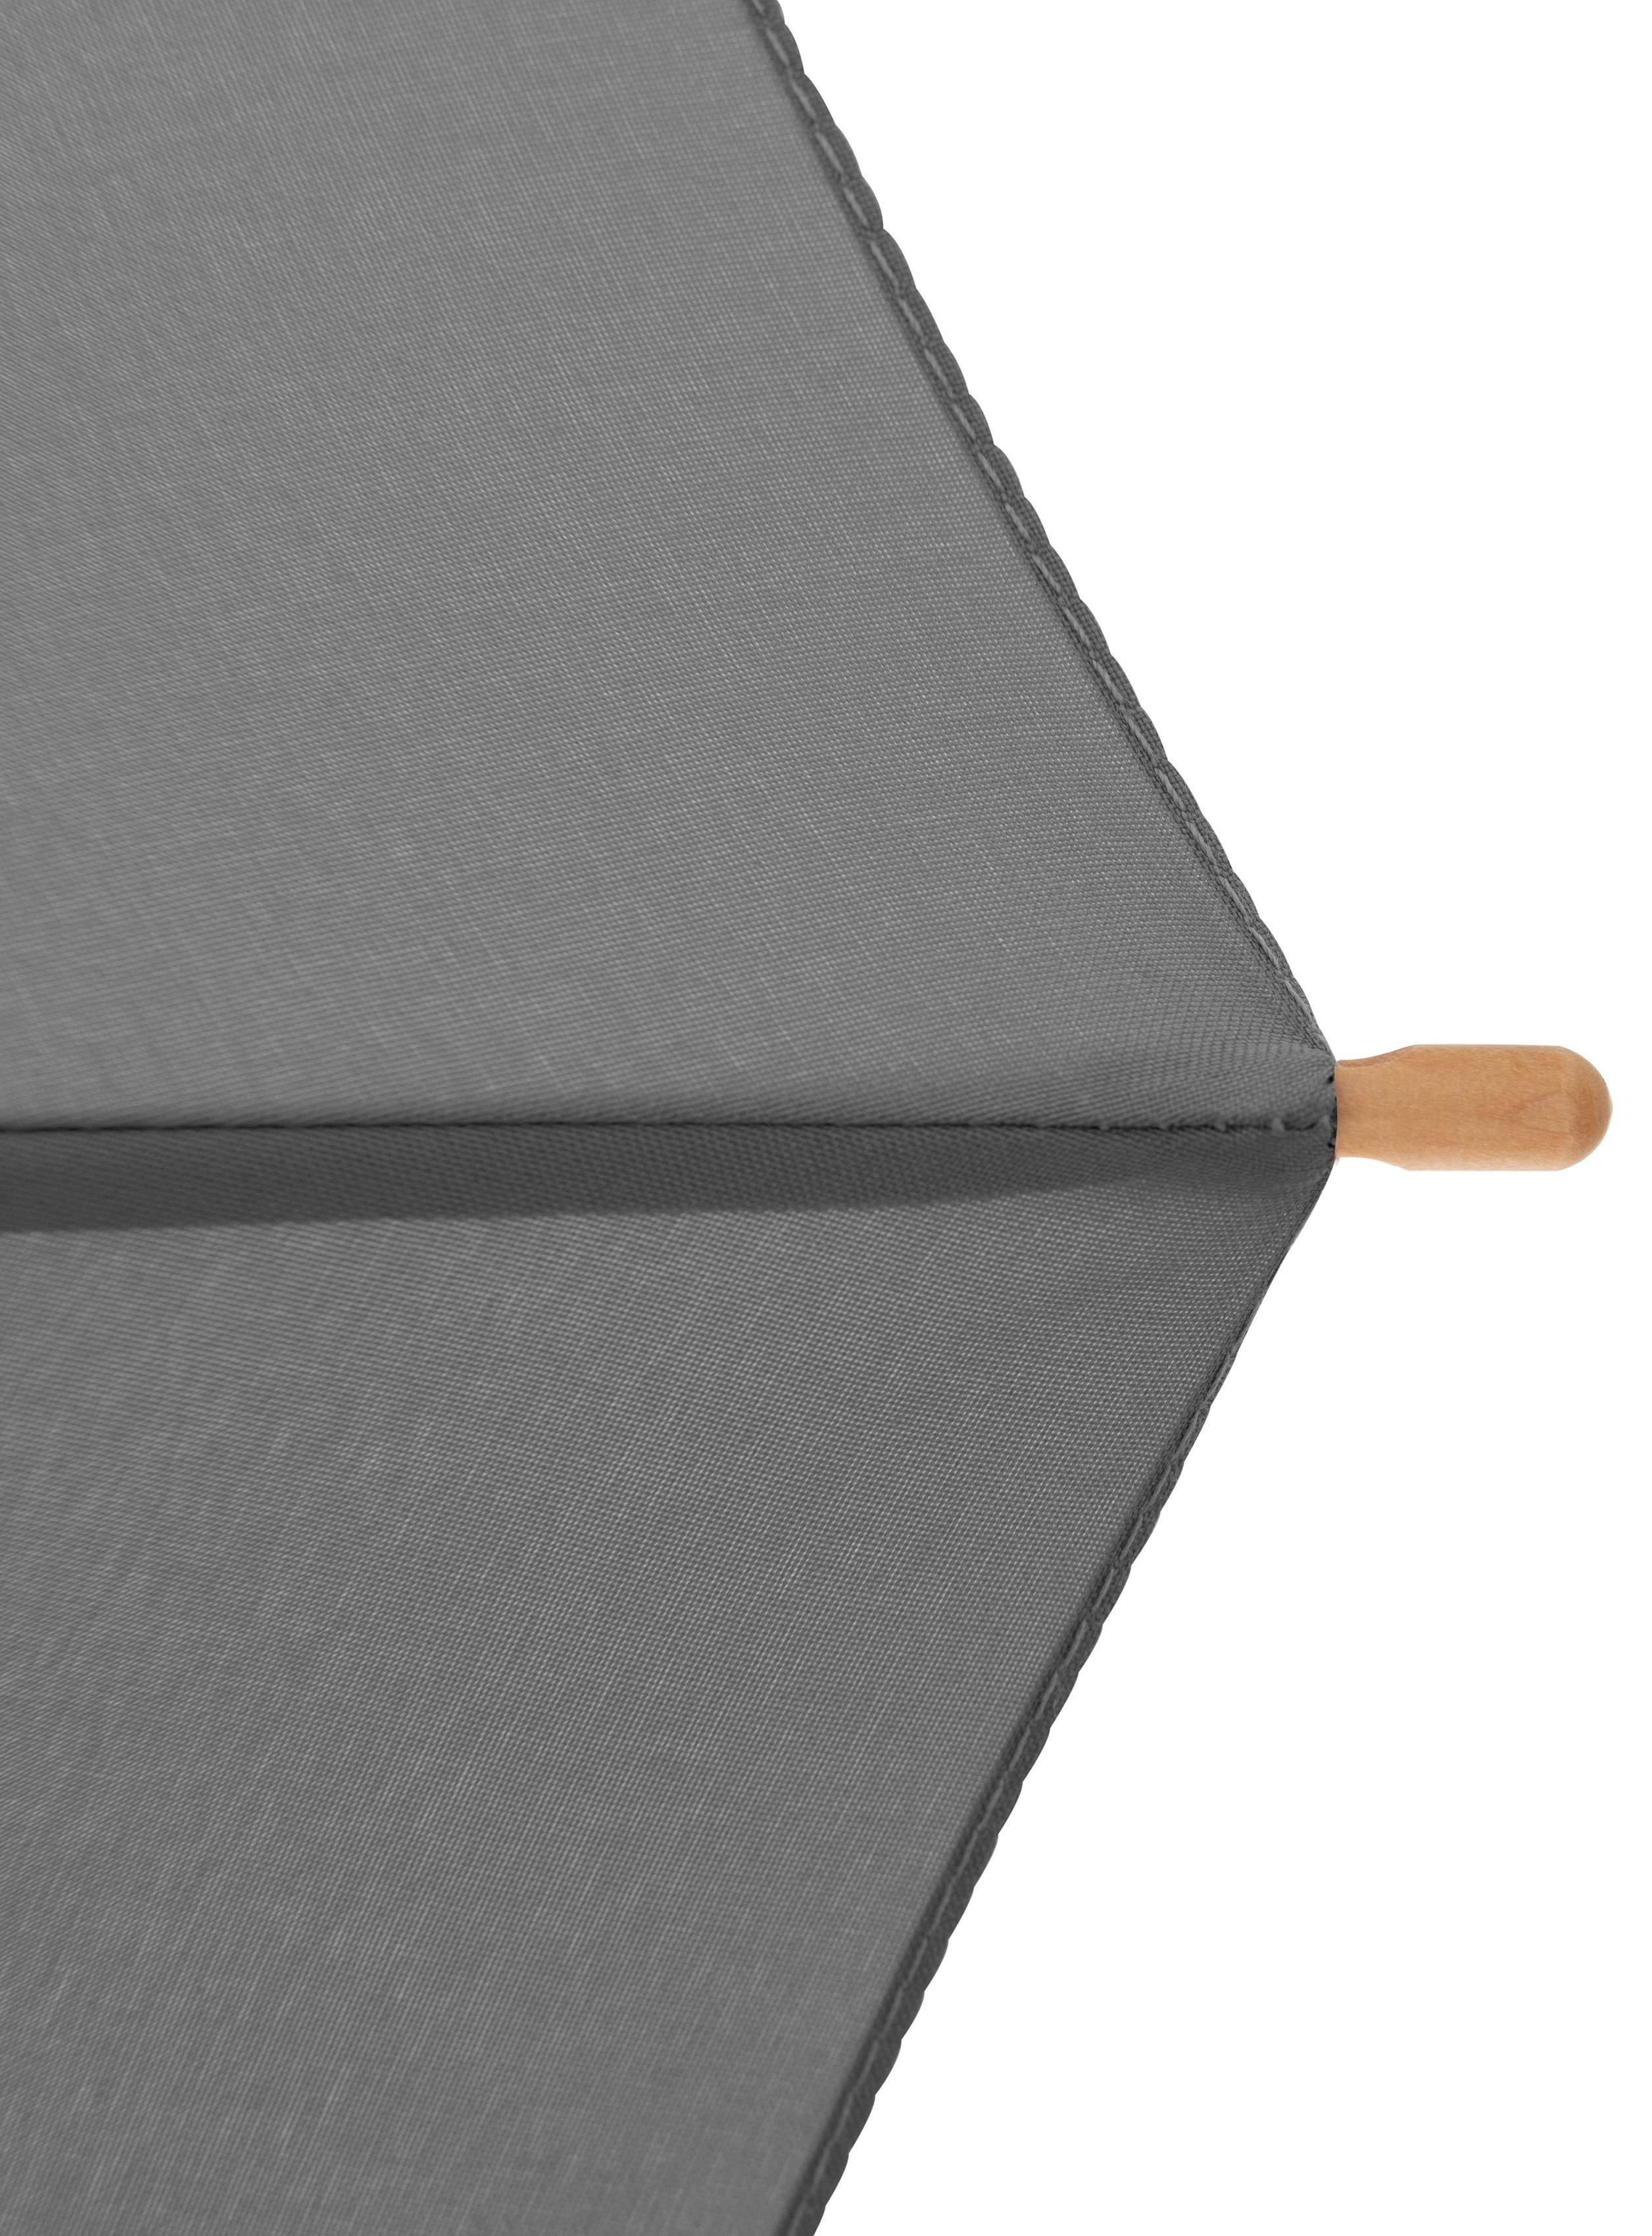 aus mit slate Long, Holz doppler® Schirmgriff Stockregenschirm grey, recyceltem aus nature Material